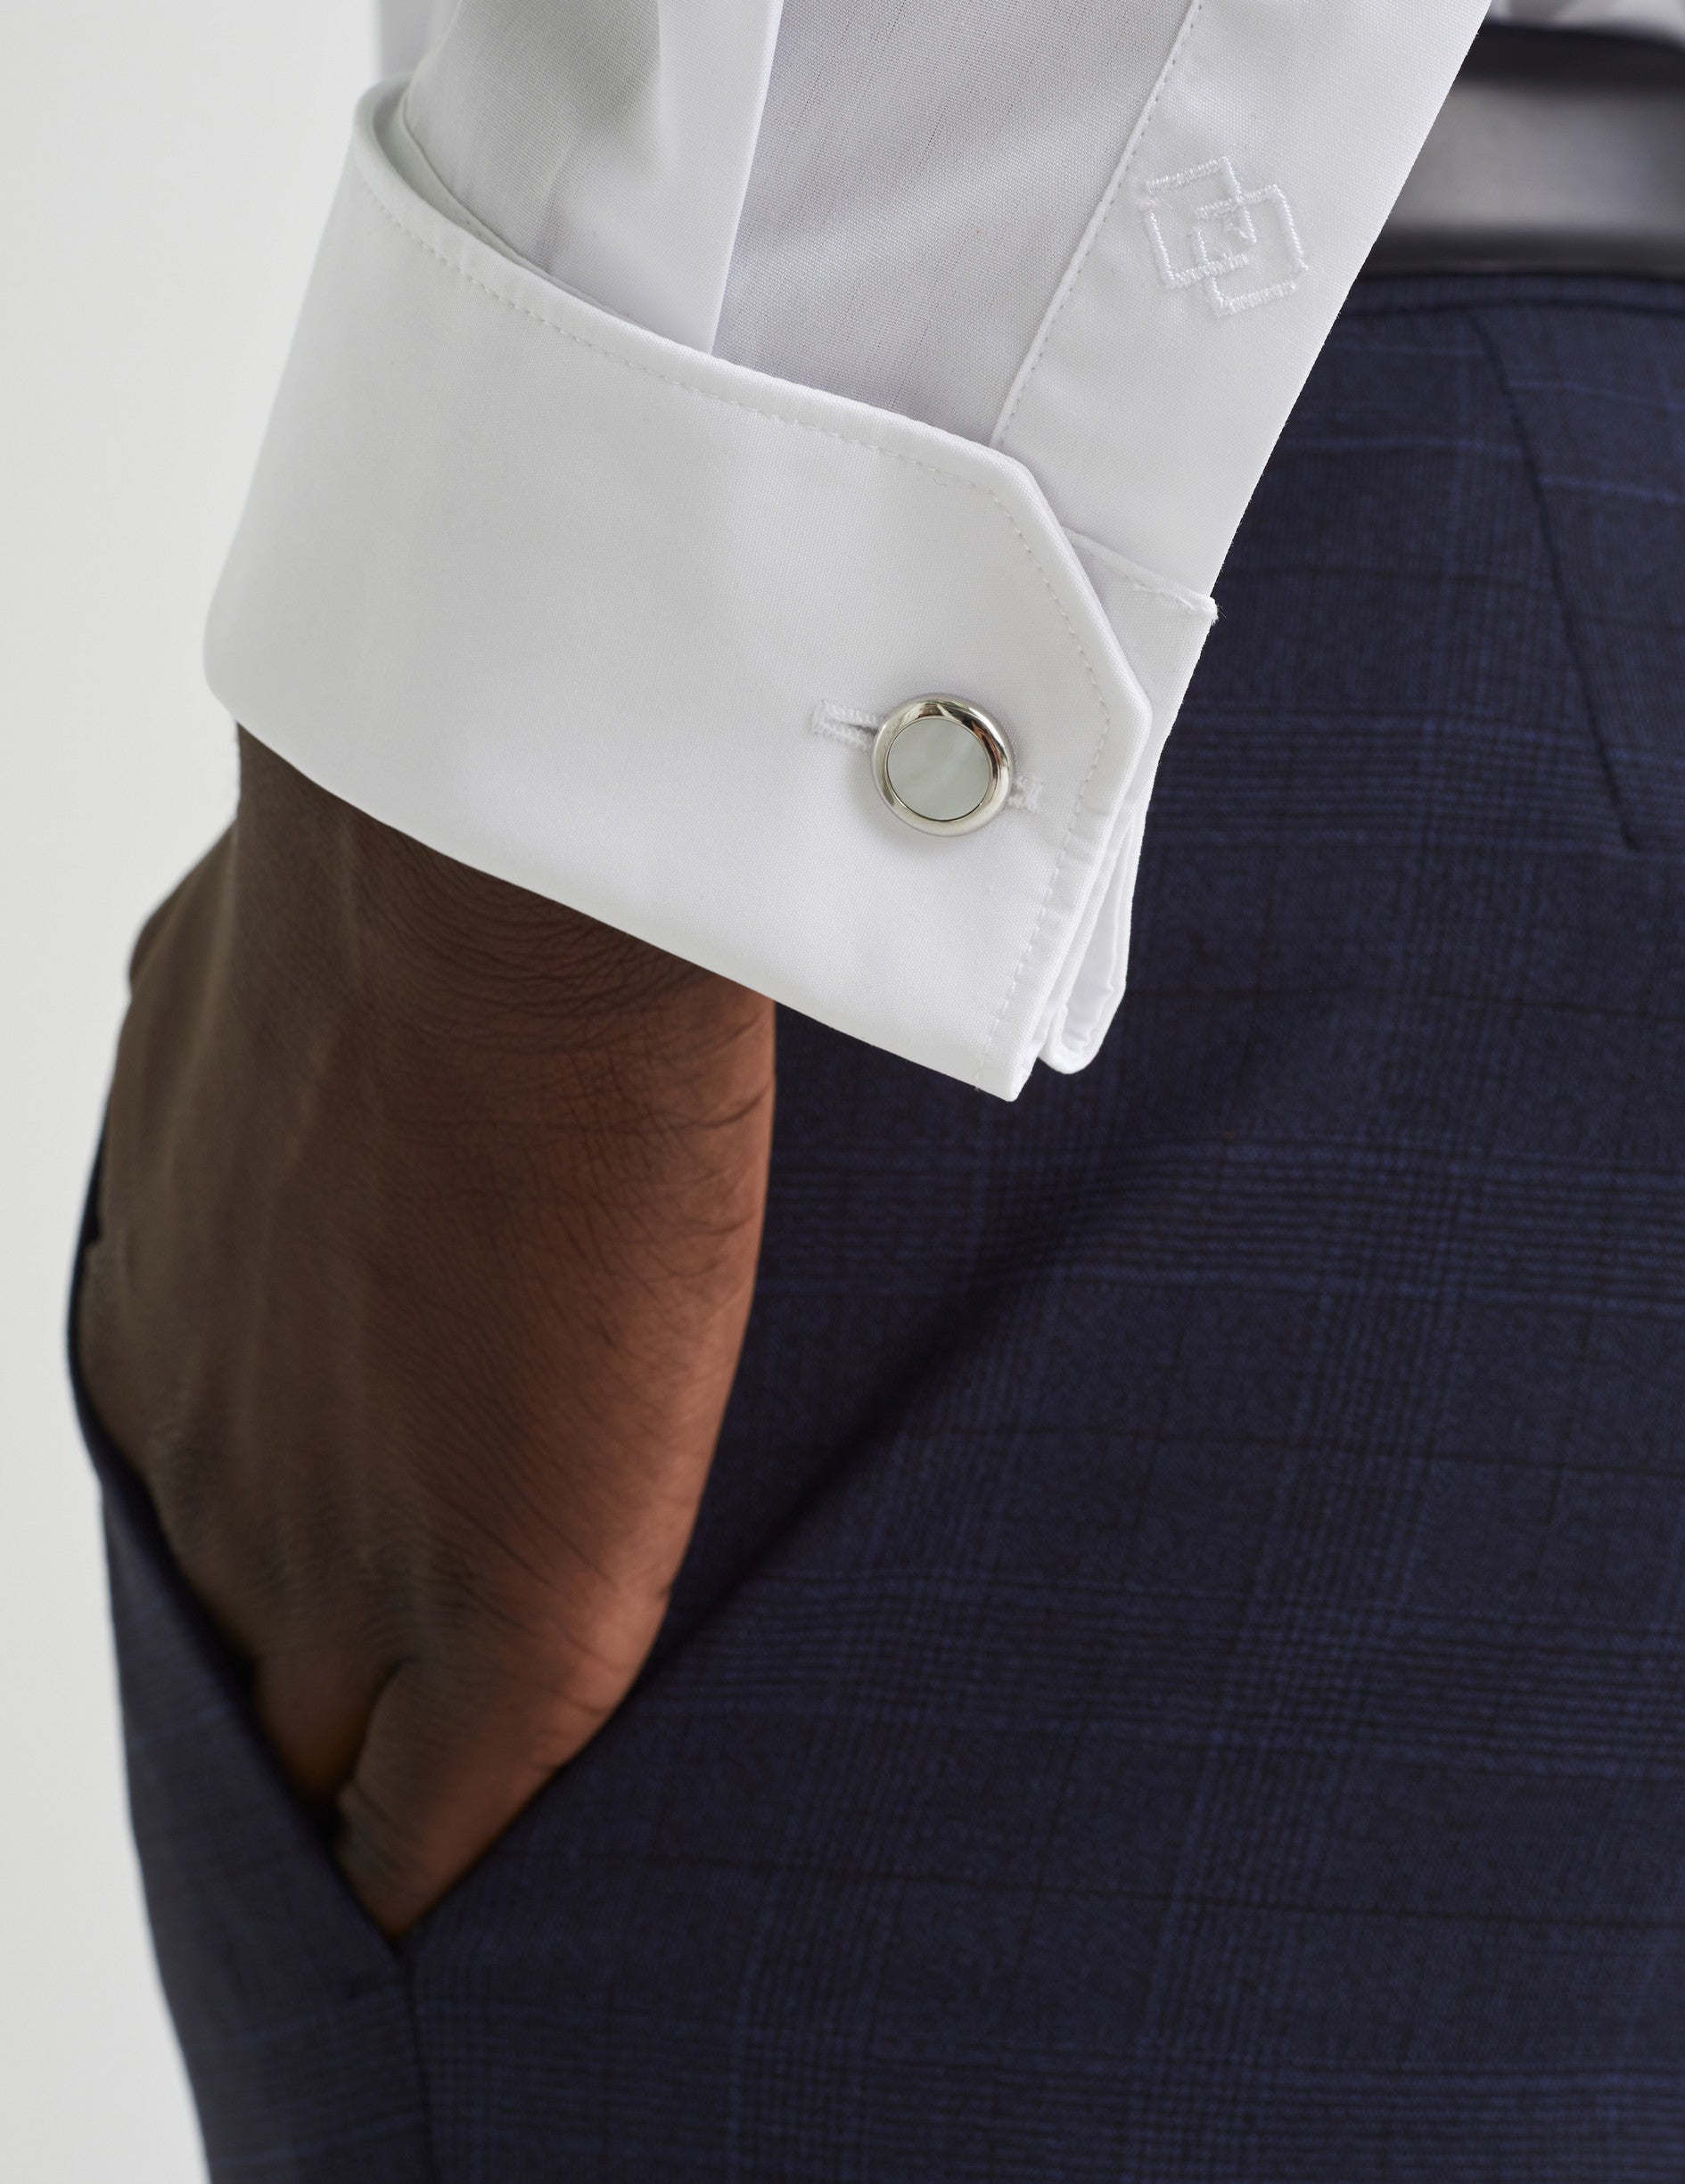 Semi-fitted white hidden throat shirt - Poplin - Figaret Collar - French Cuffs